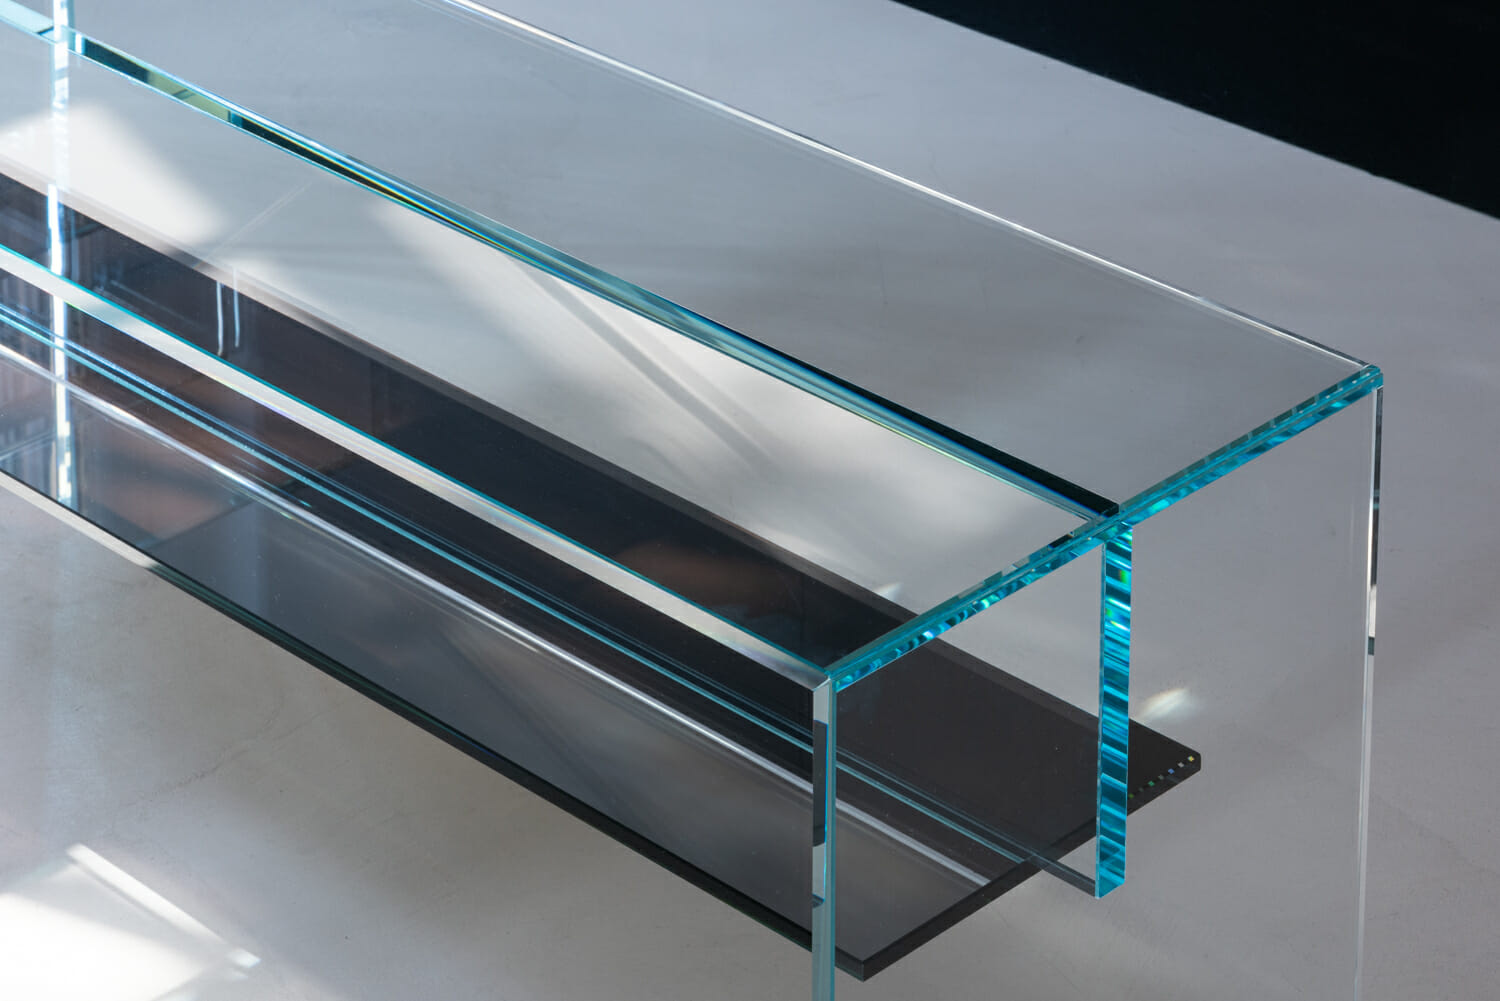 https://www.decorilla.com/online-decorating/wp-content/uploads/2019/05/high-end-glass-furniture-OONIKO-beam-l.jpg